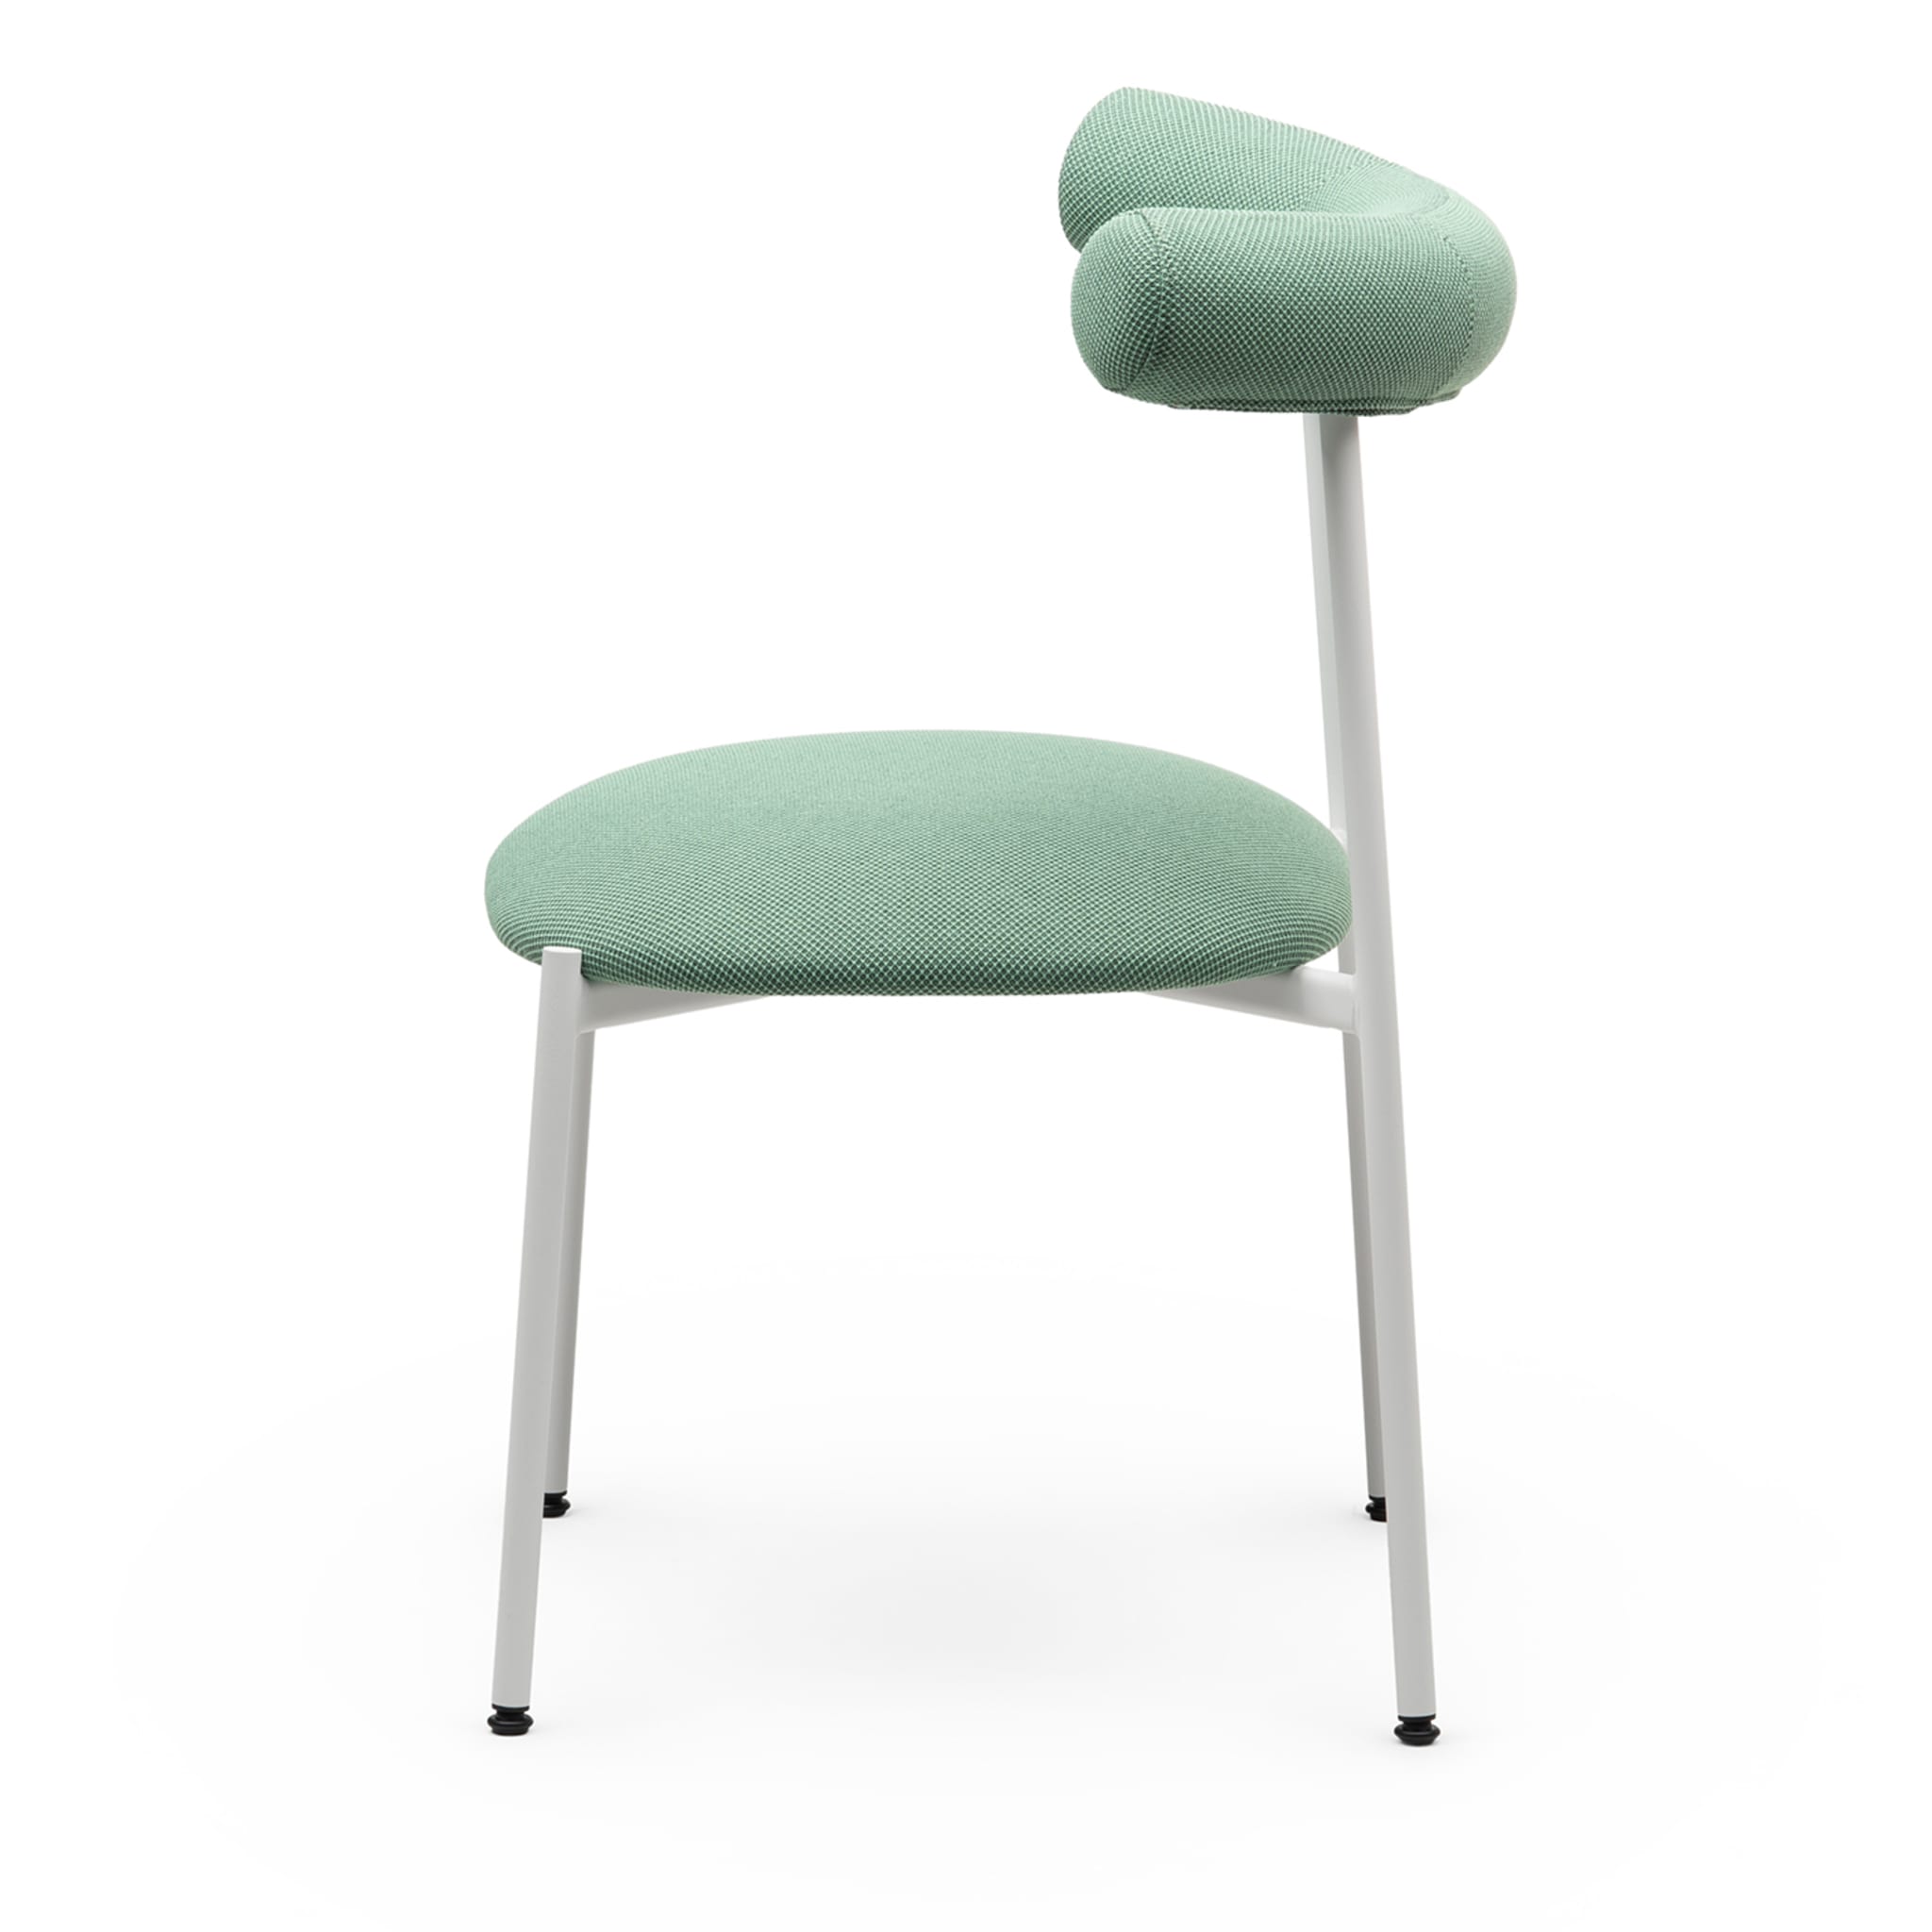 Pampa S Sage-Green & White Chair by Studio Pastina - Alternative view 1